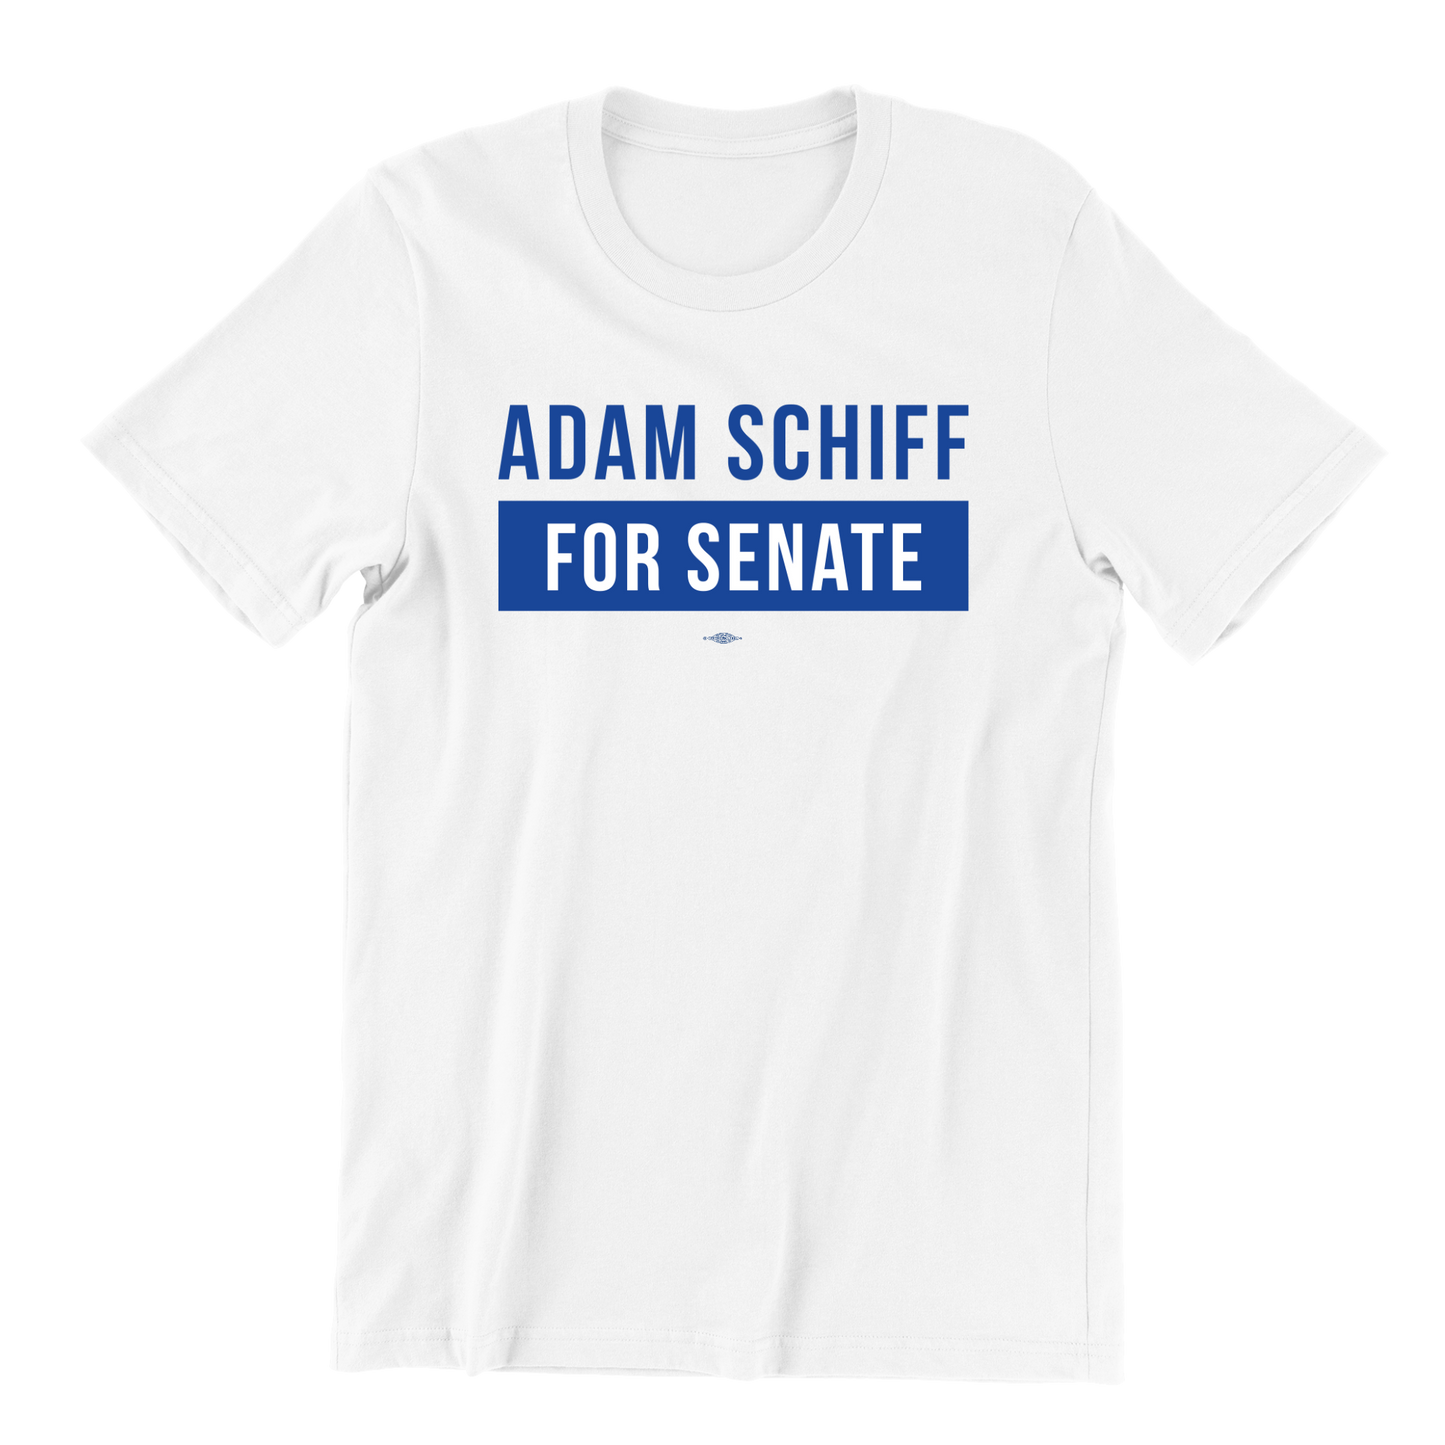 Adam Schiff for Senate T-shirt